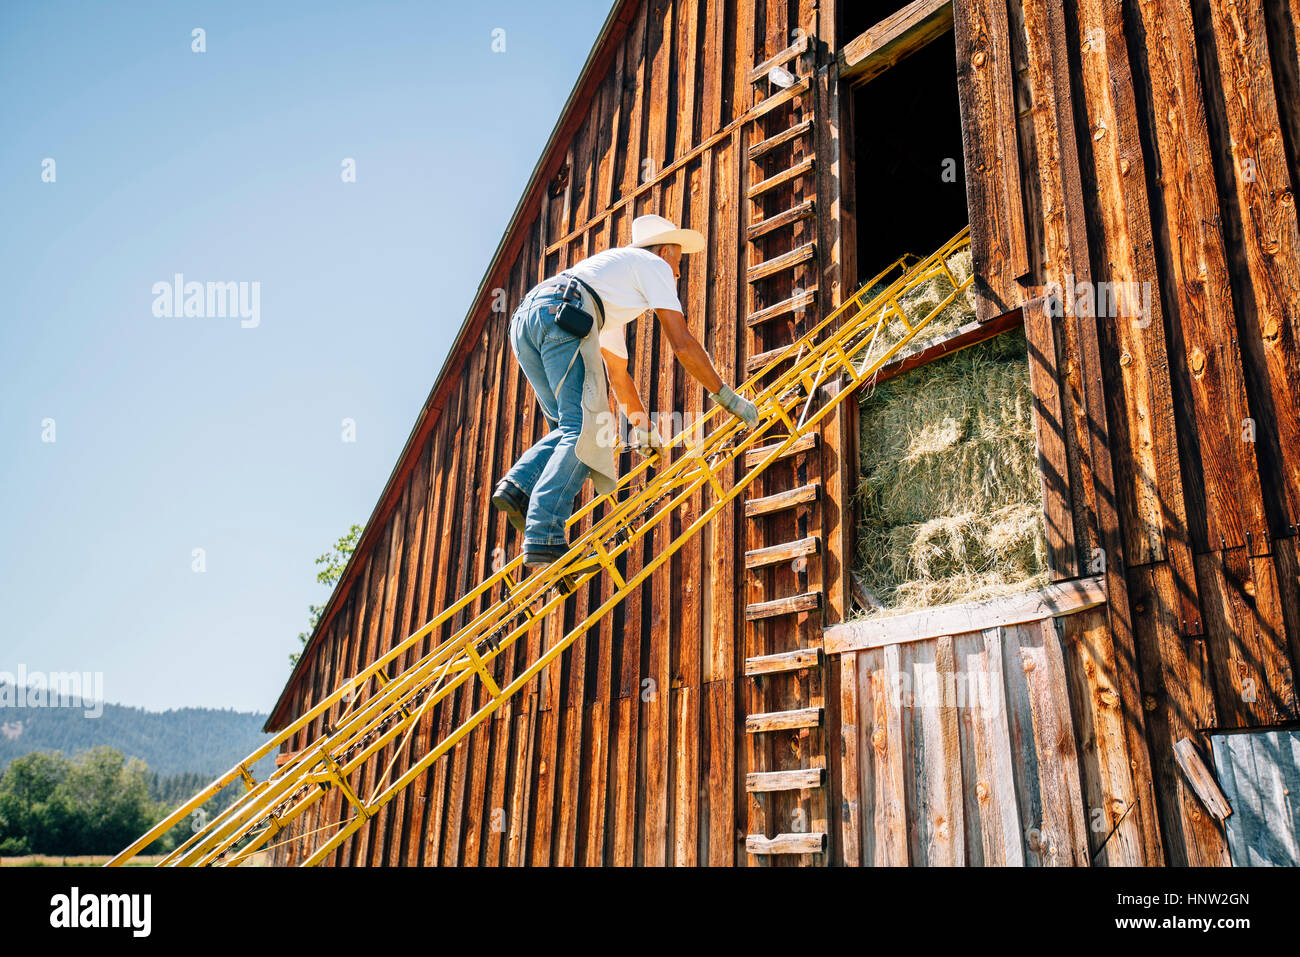 Caucasian farmer climbing ladder to barn Stock Photo